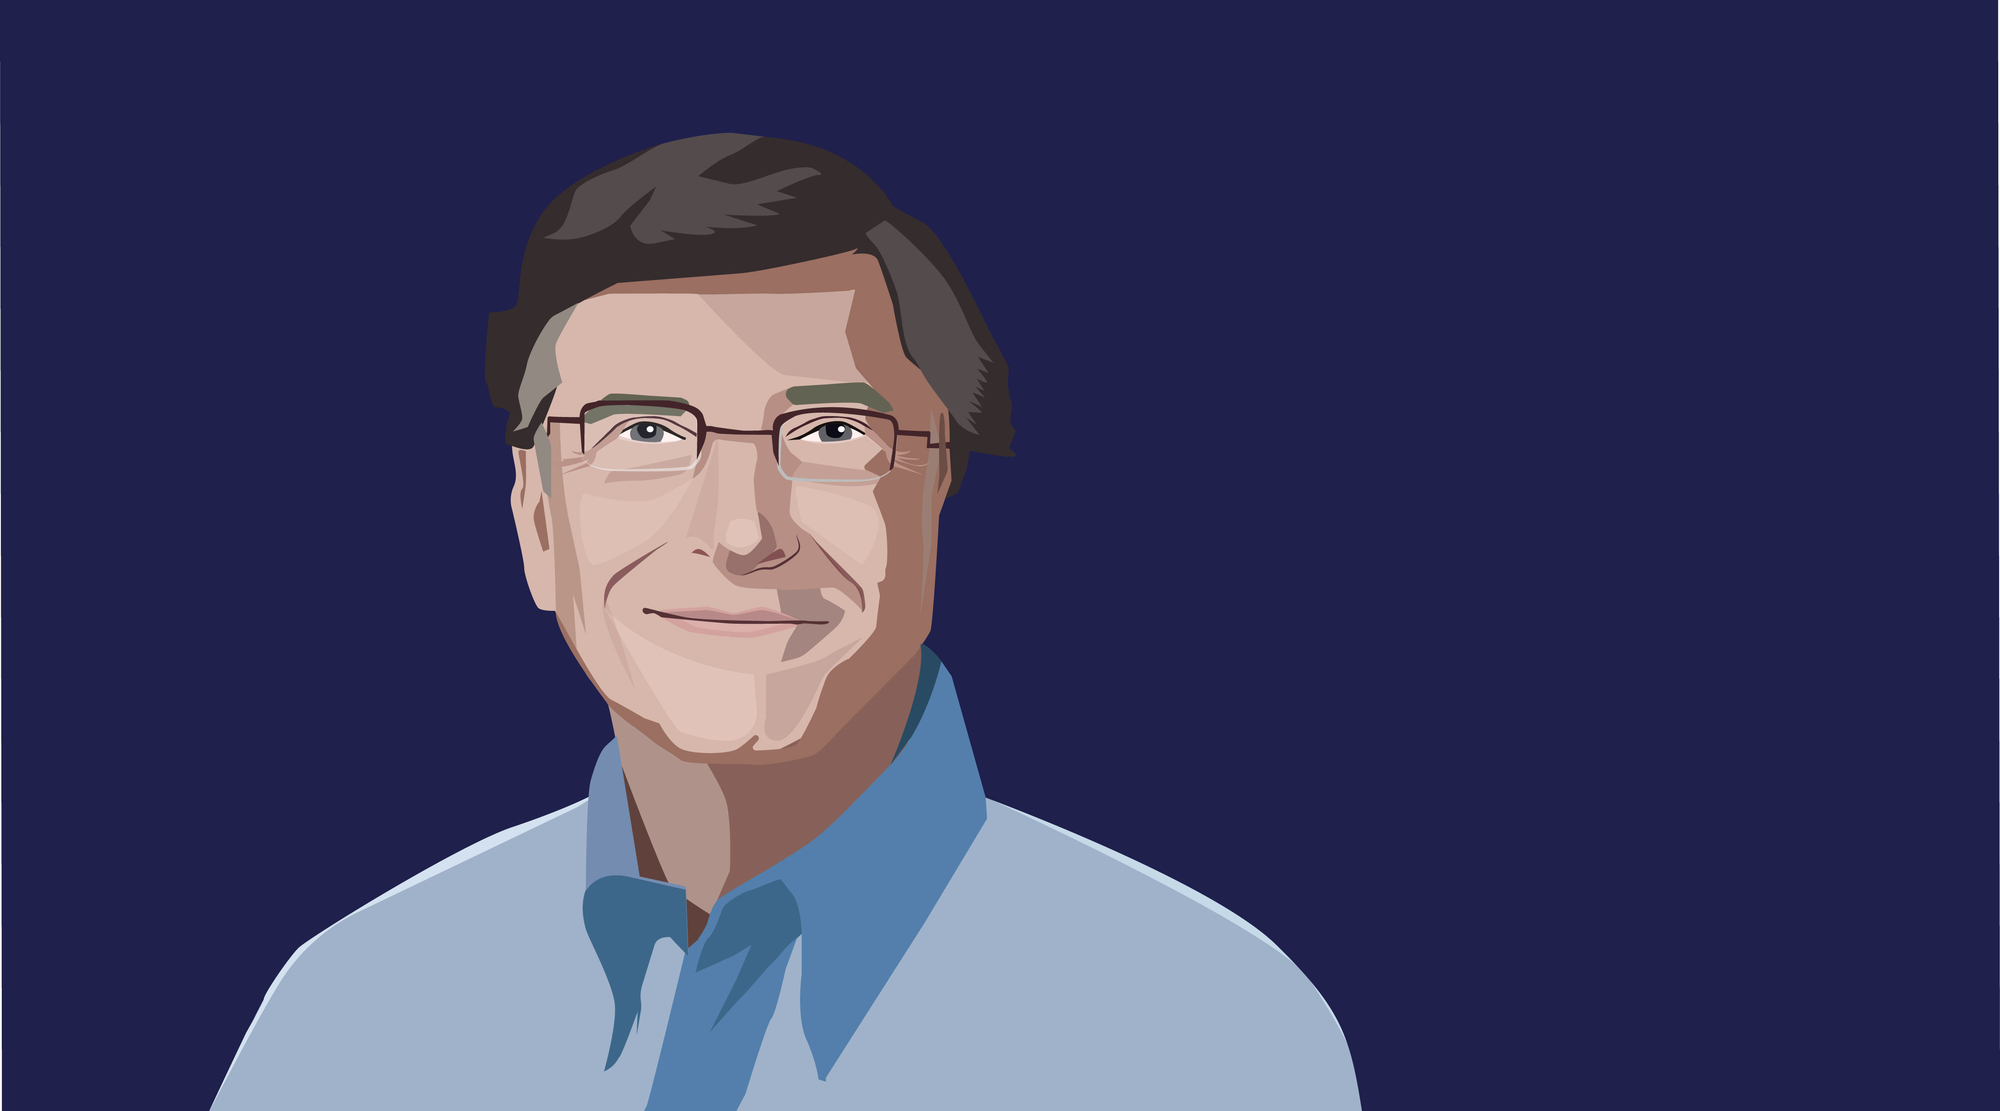 Bill Gates on AI: A Tale of Threats & Hypocrisy